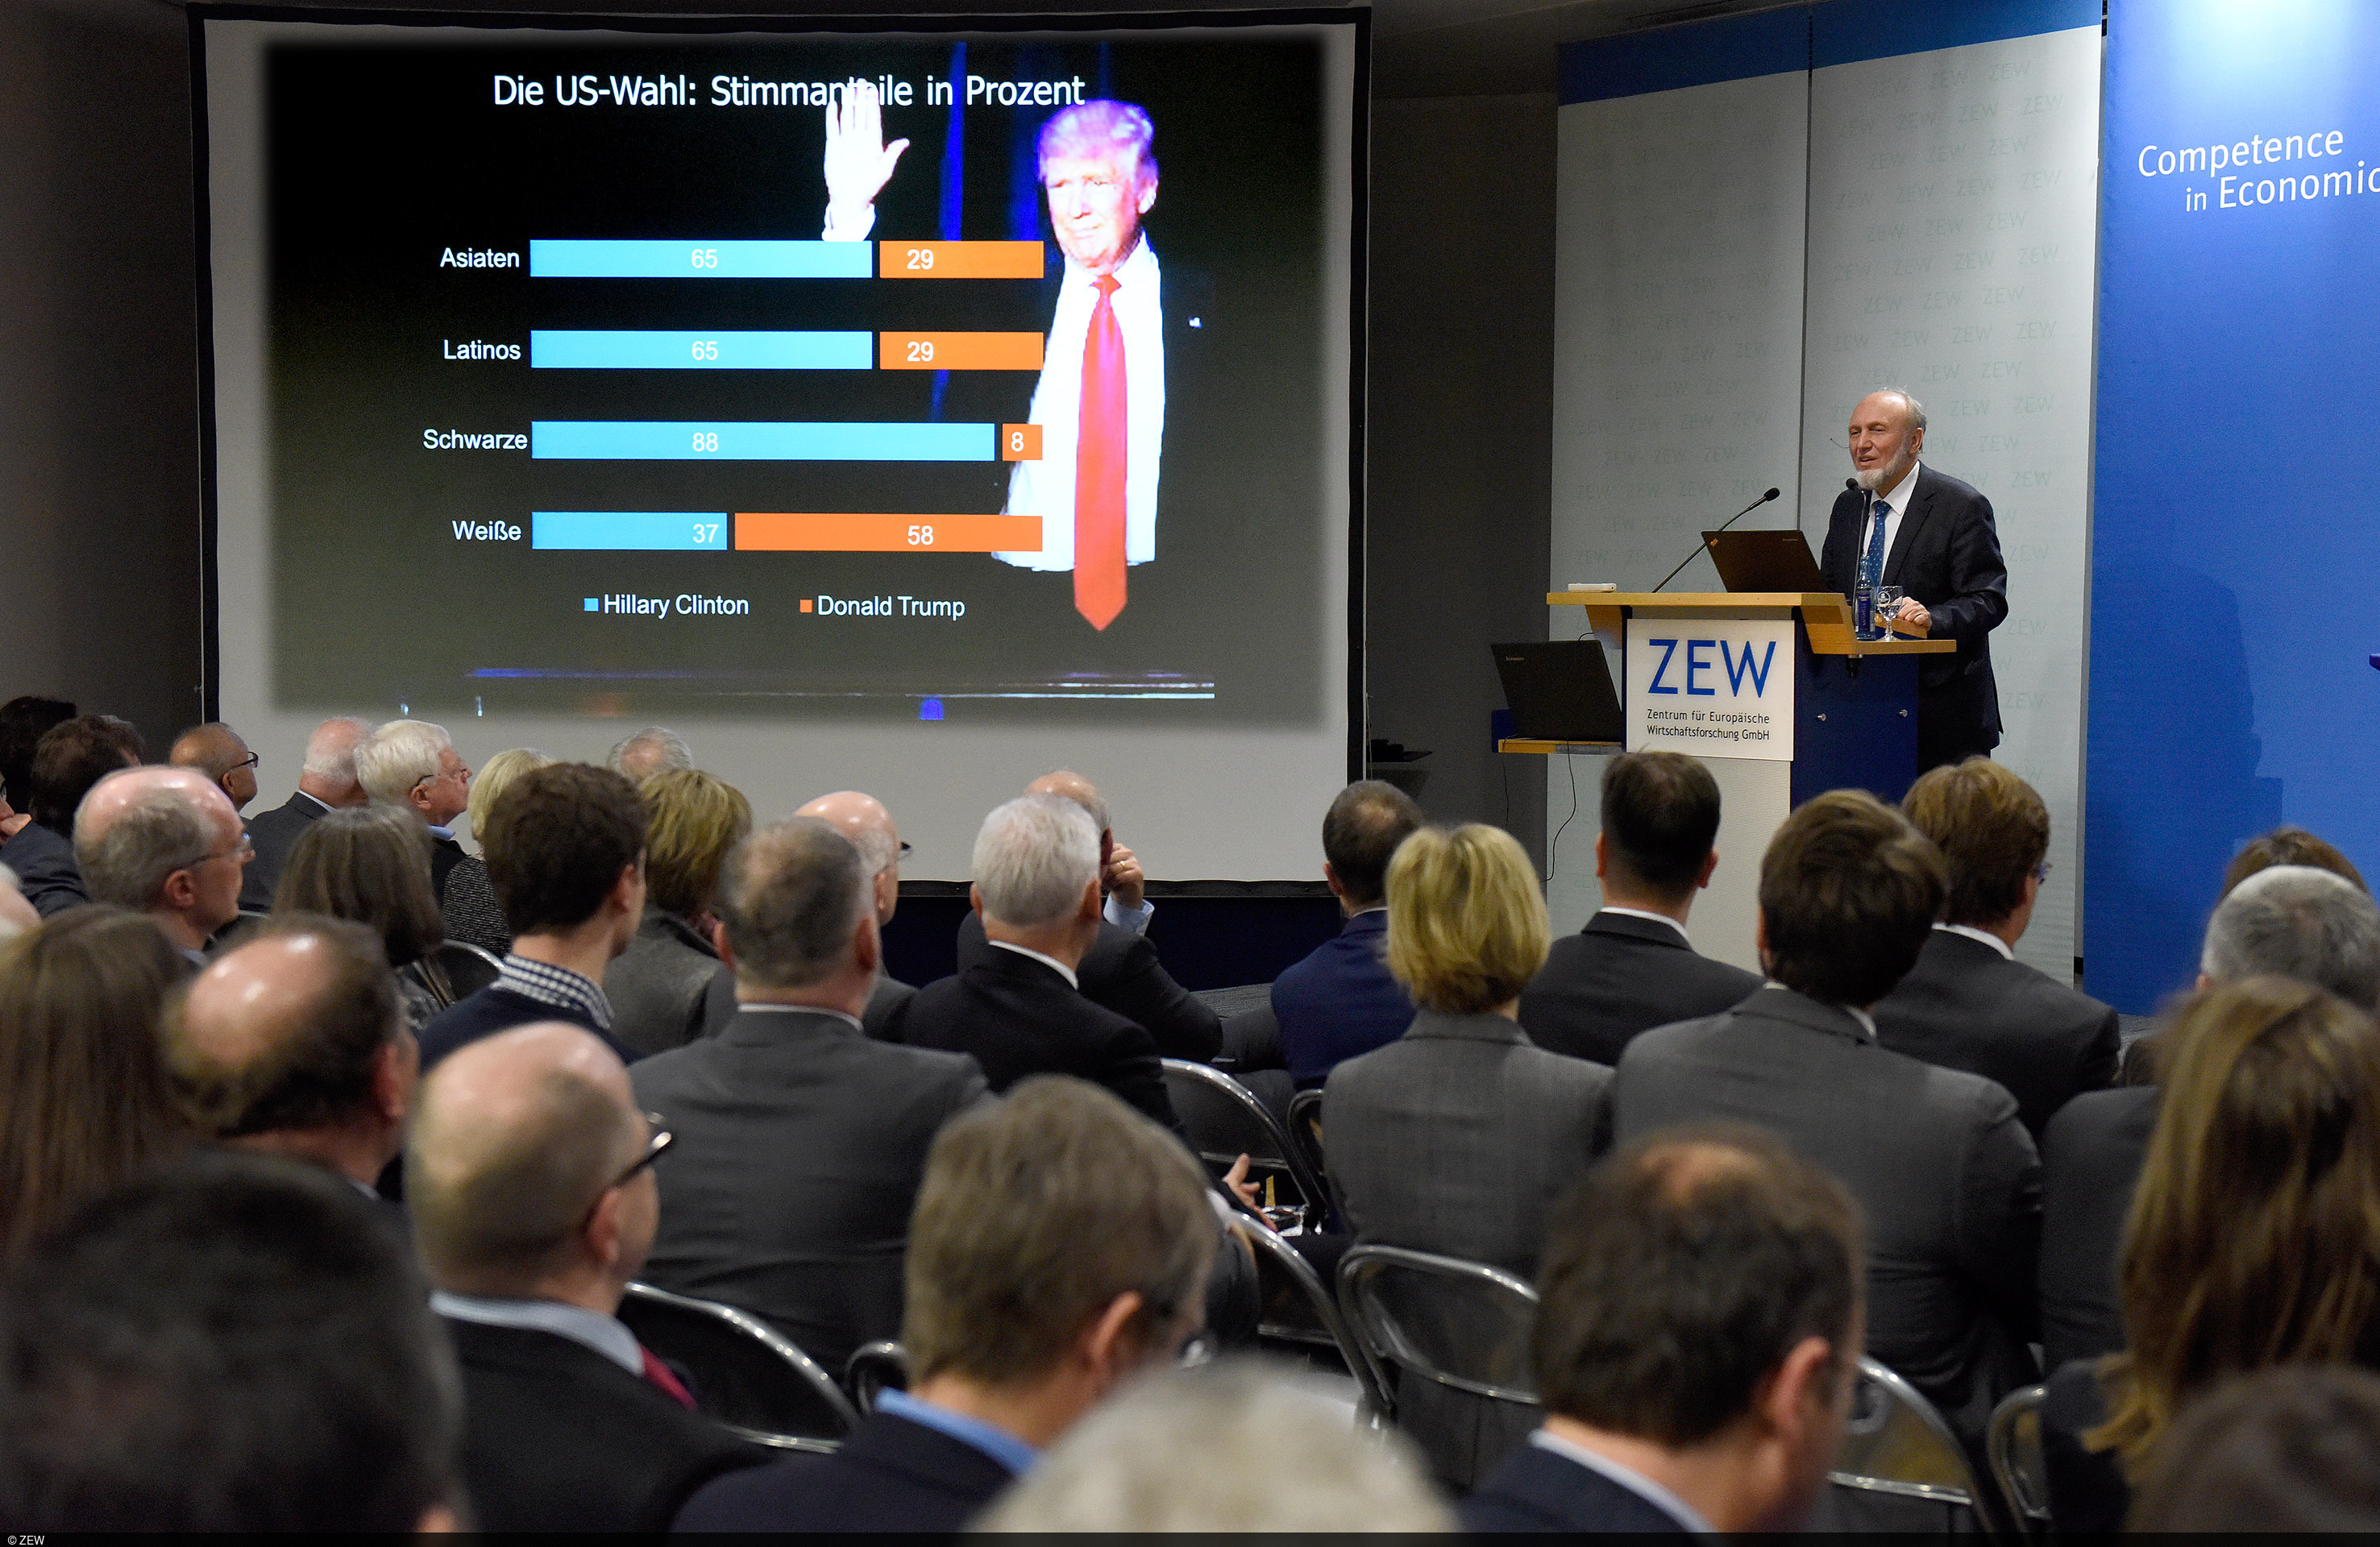 Professor Hans-Werner Sinn delivering his lecture on “Europe Post-Brexit”